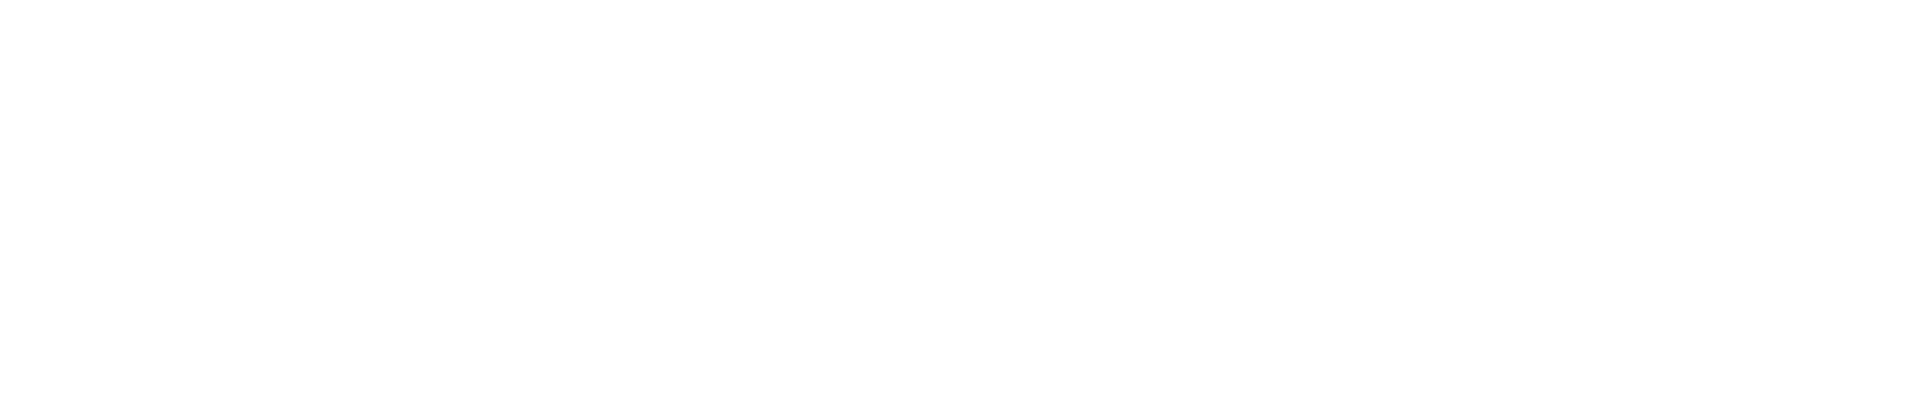 The Sea Gull Magazine logo